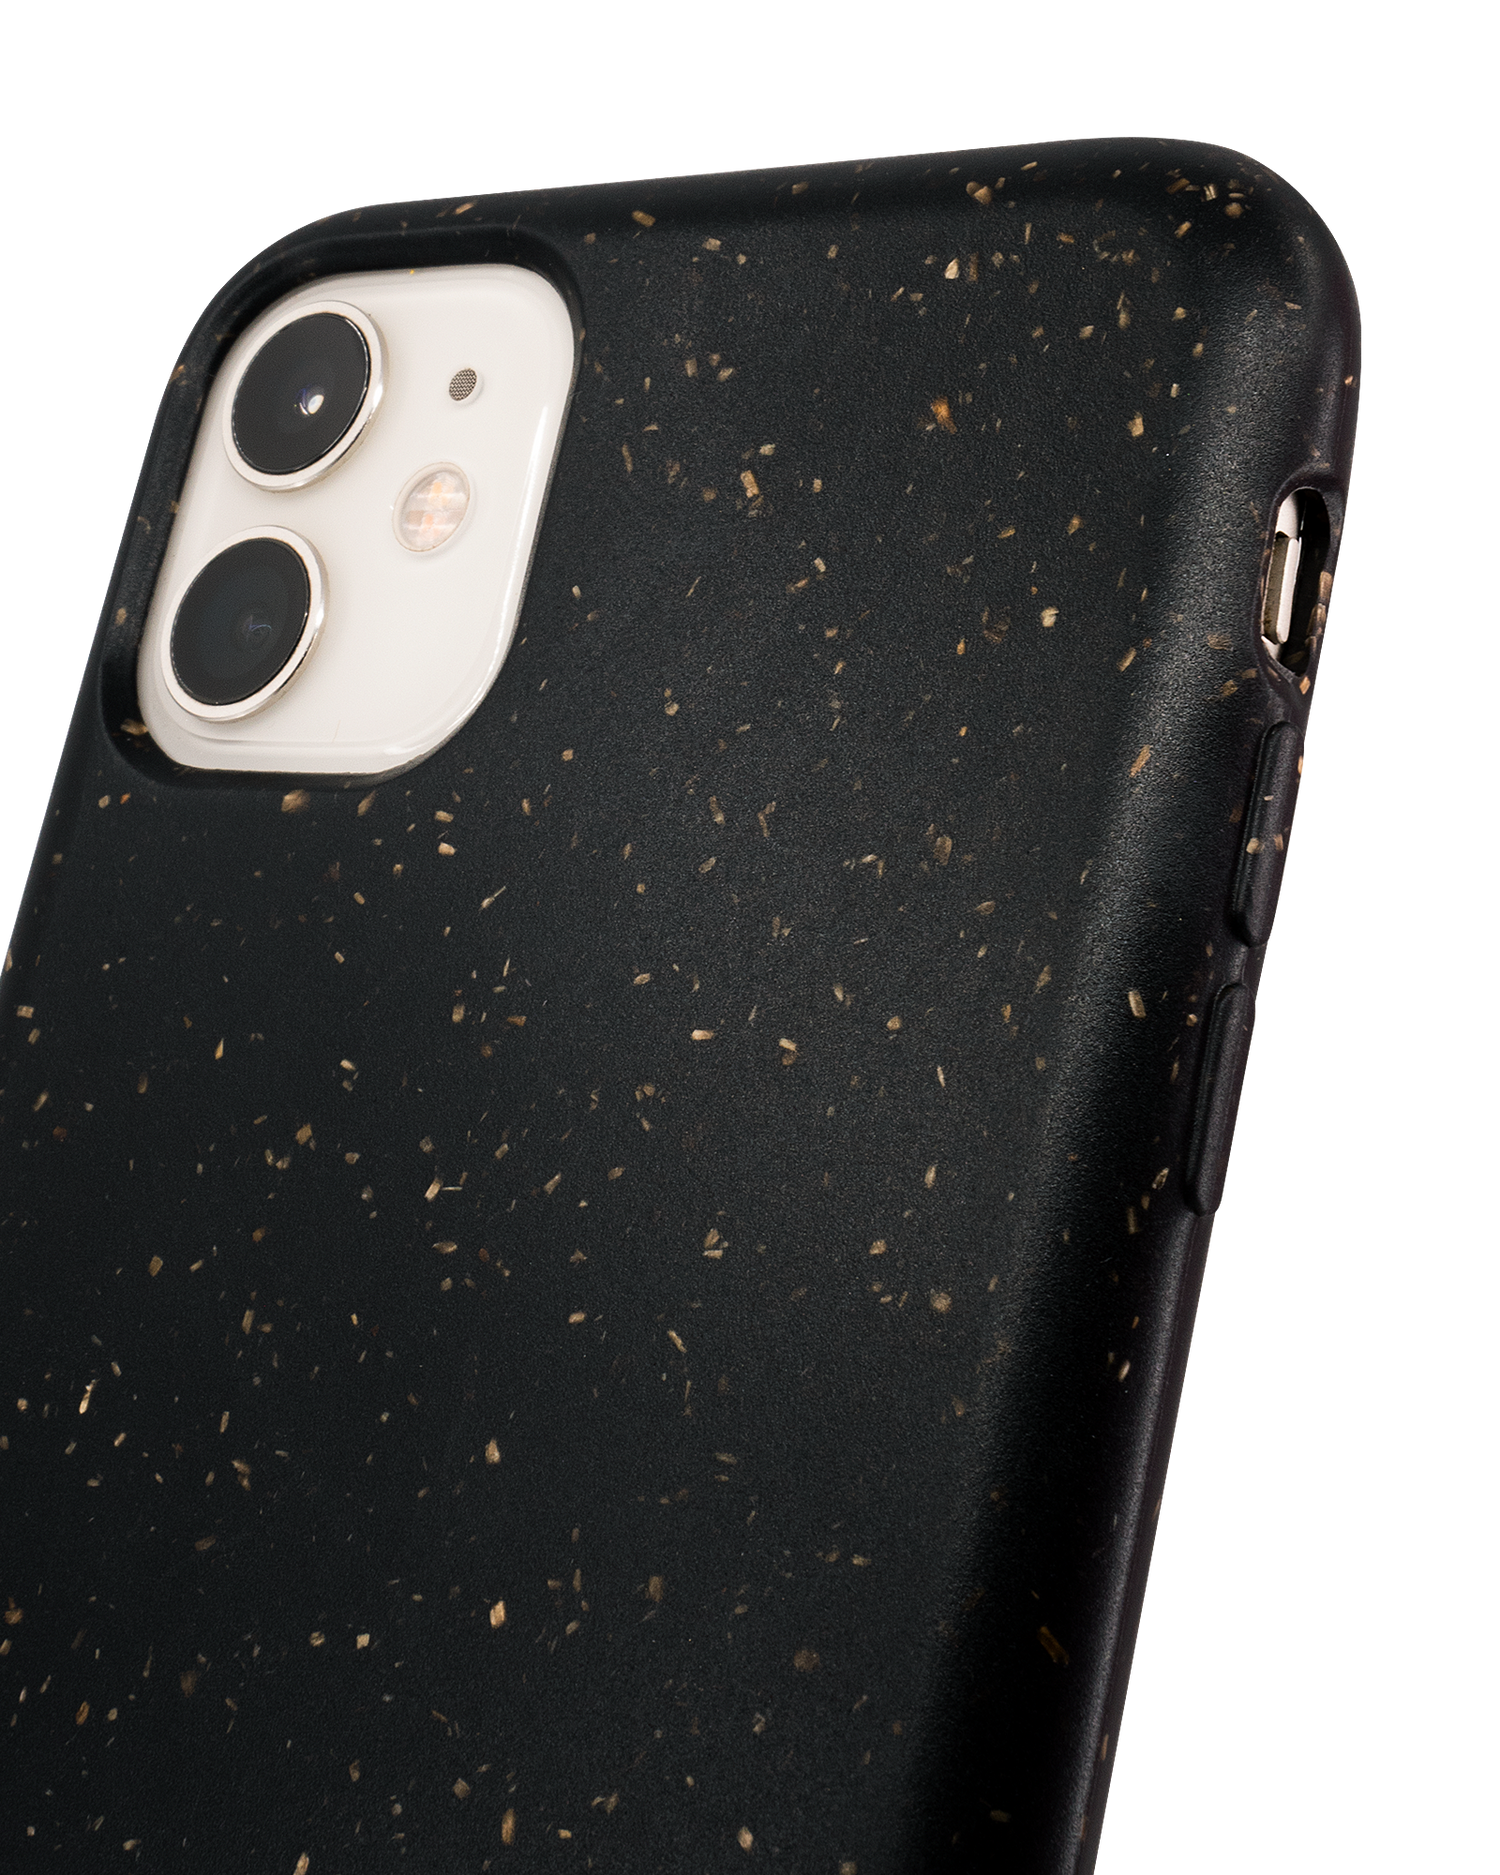 Black Eco-Friendly Phone Case for Apple iPhone 11: Details inside